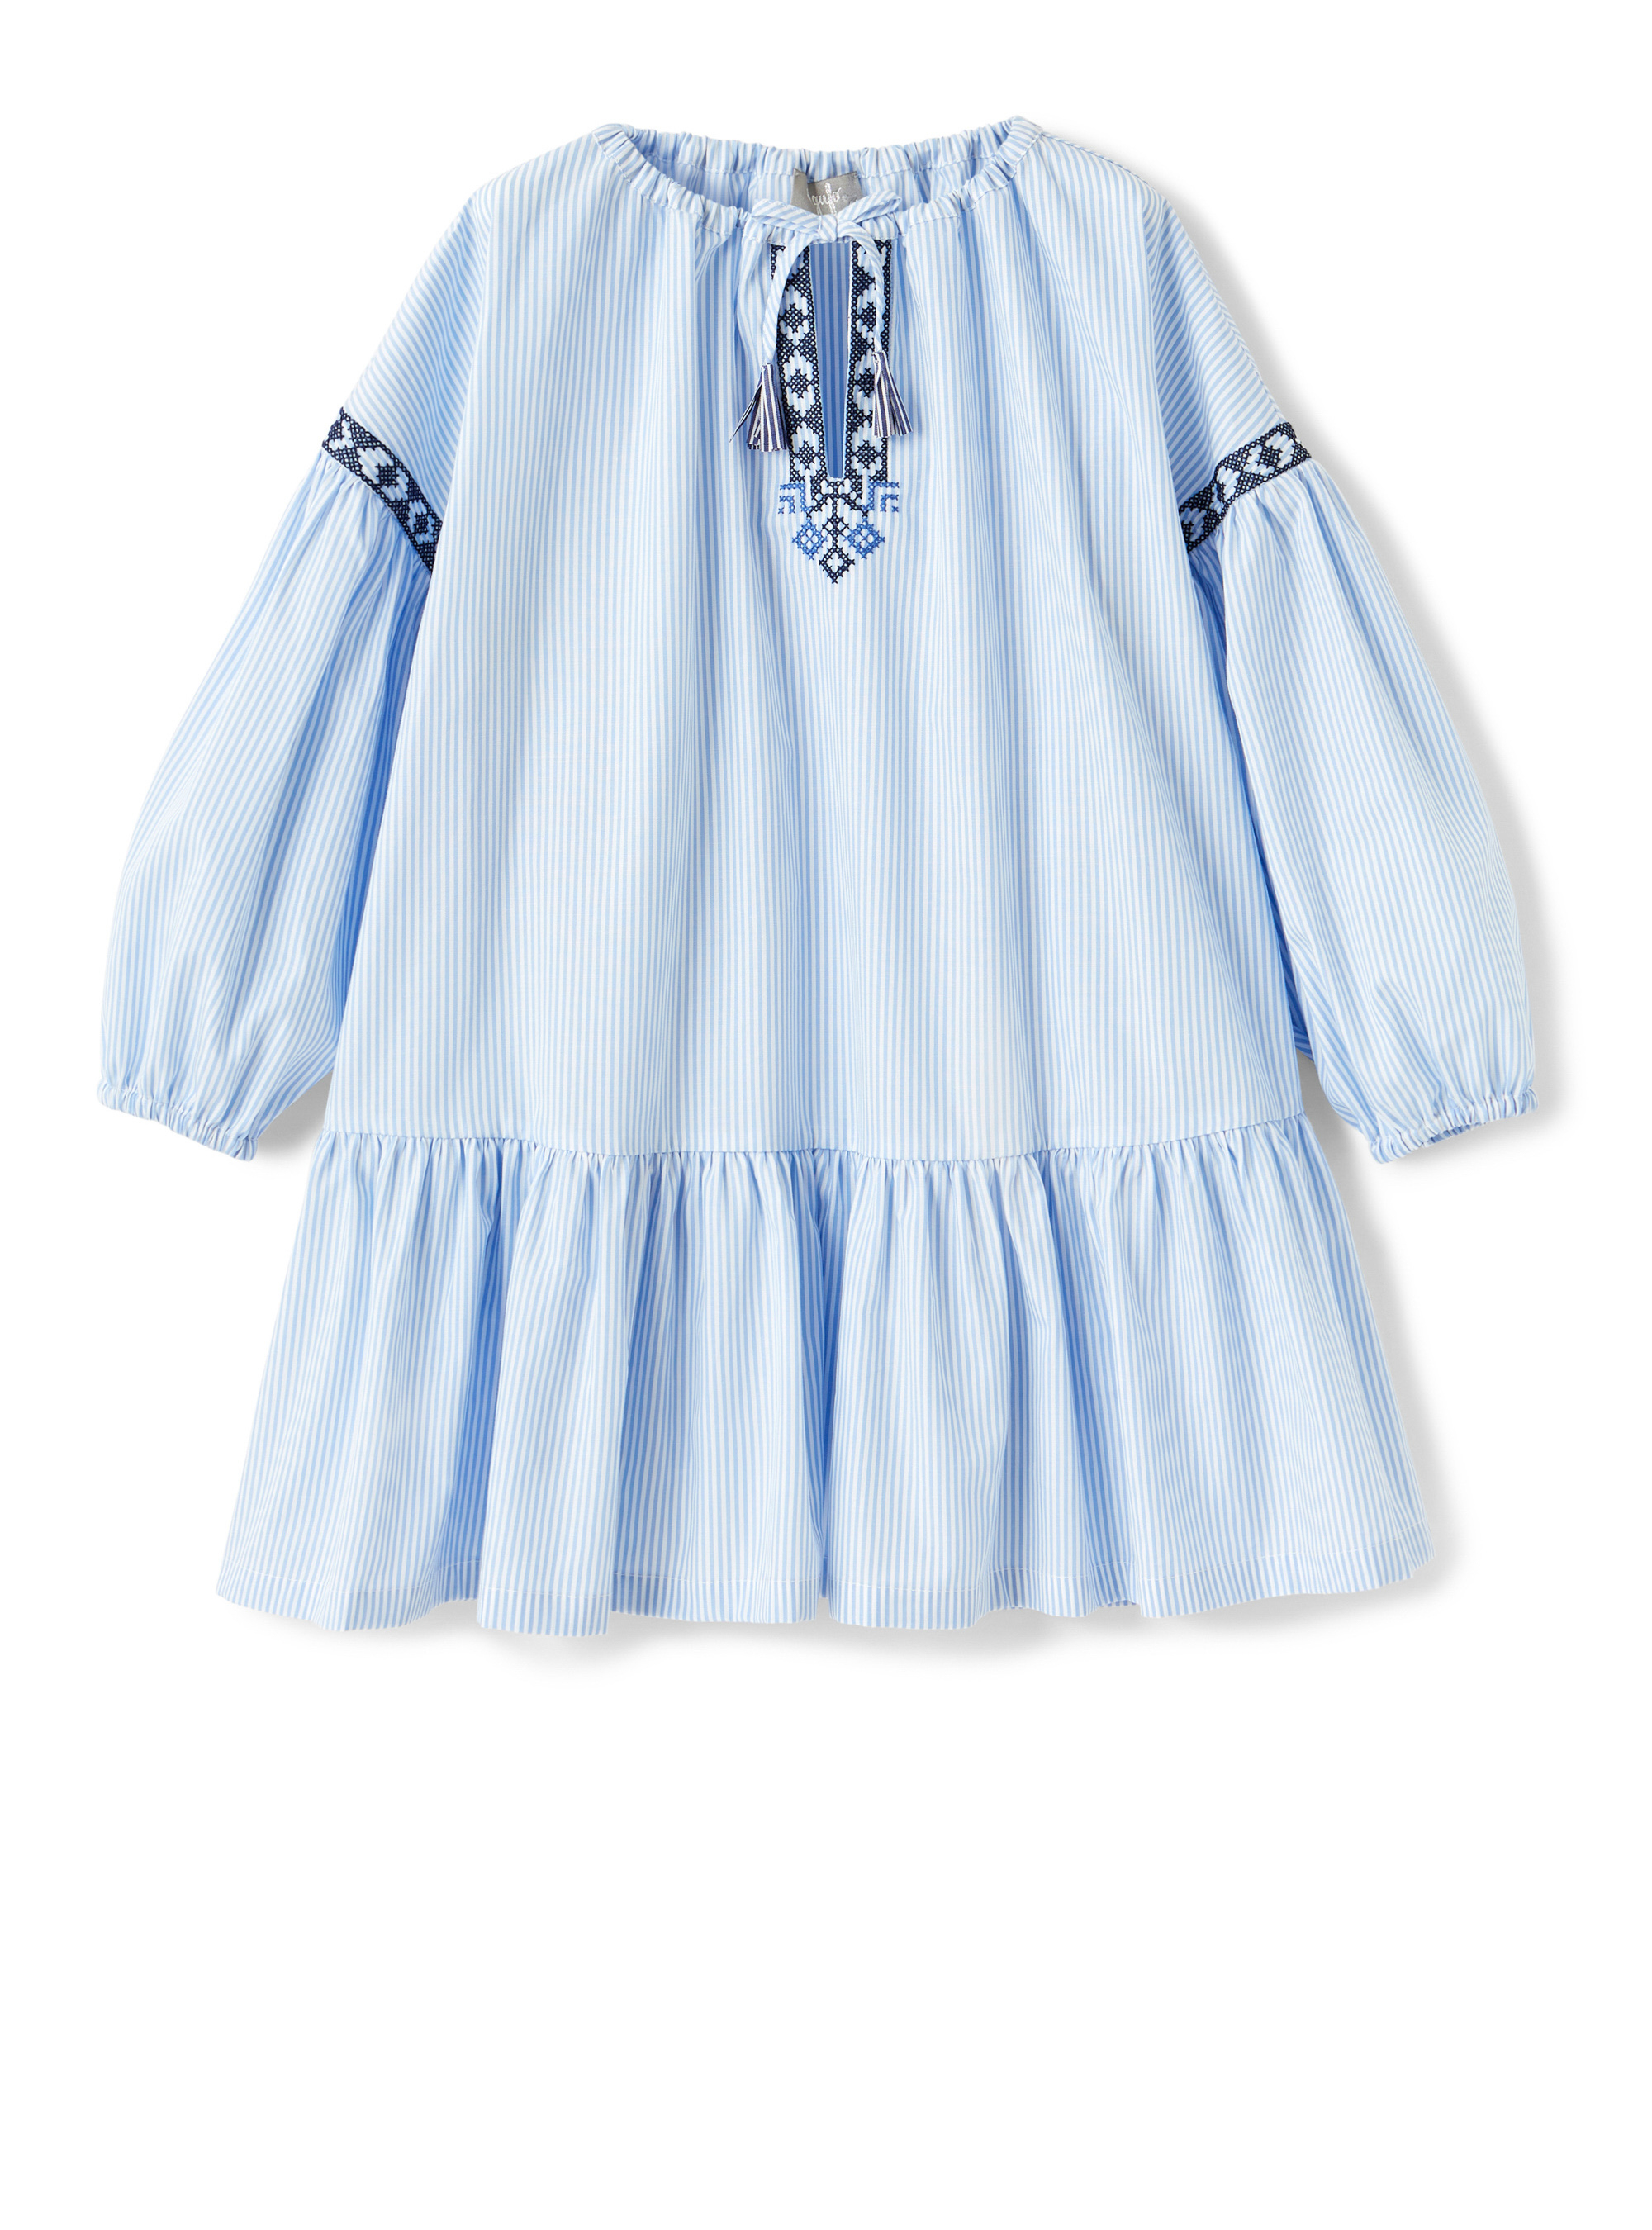 Striped dress with folk embroidery - Blue | Il Gufo